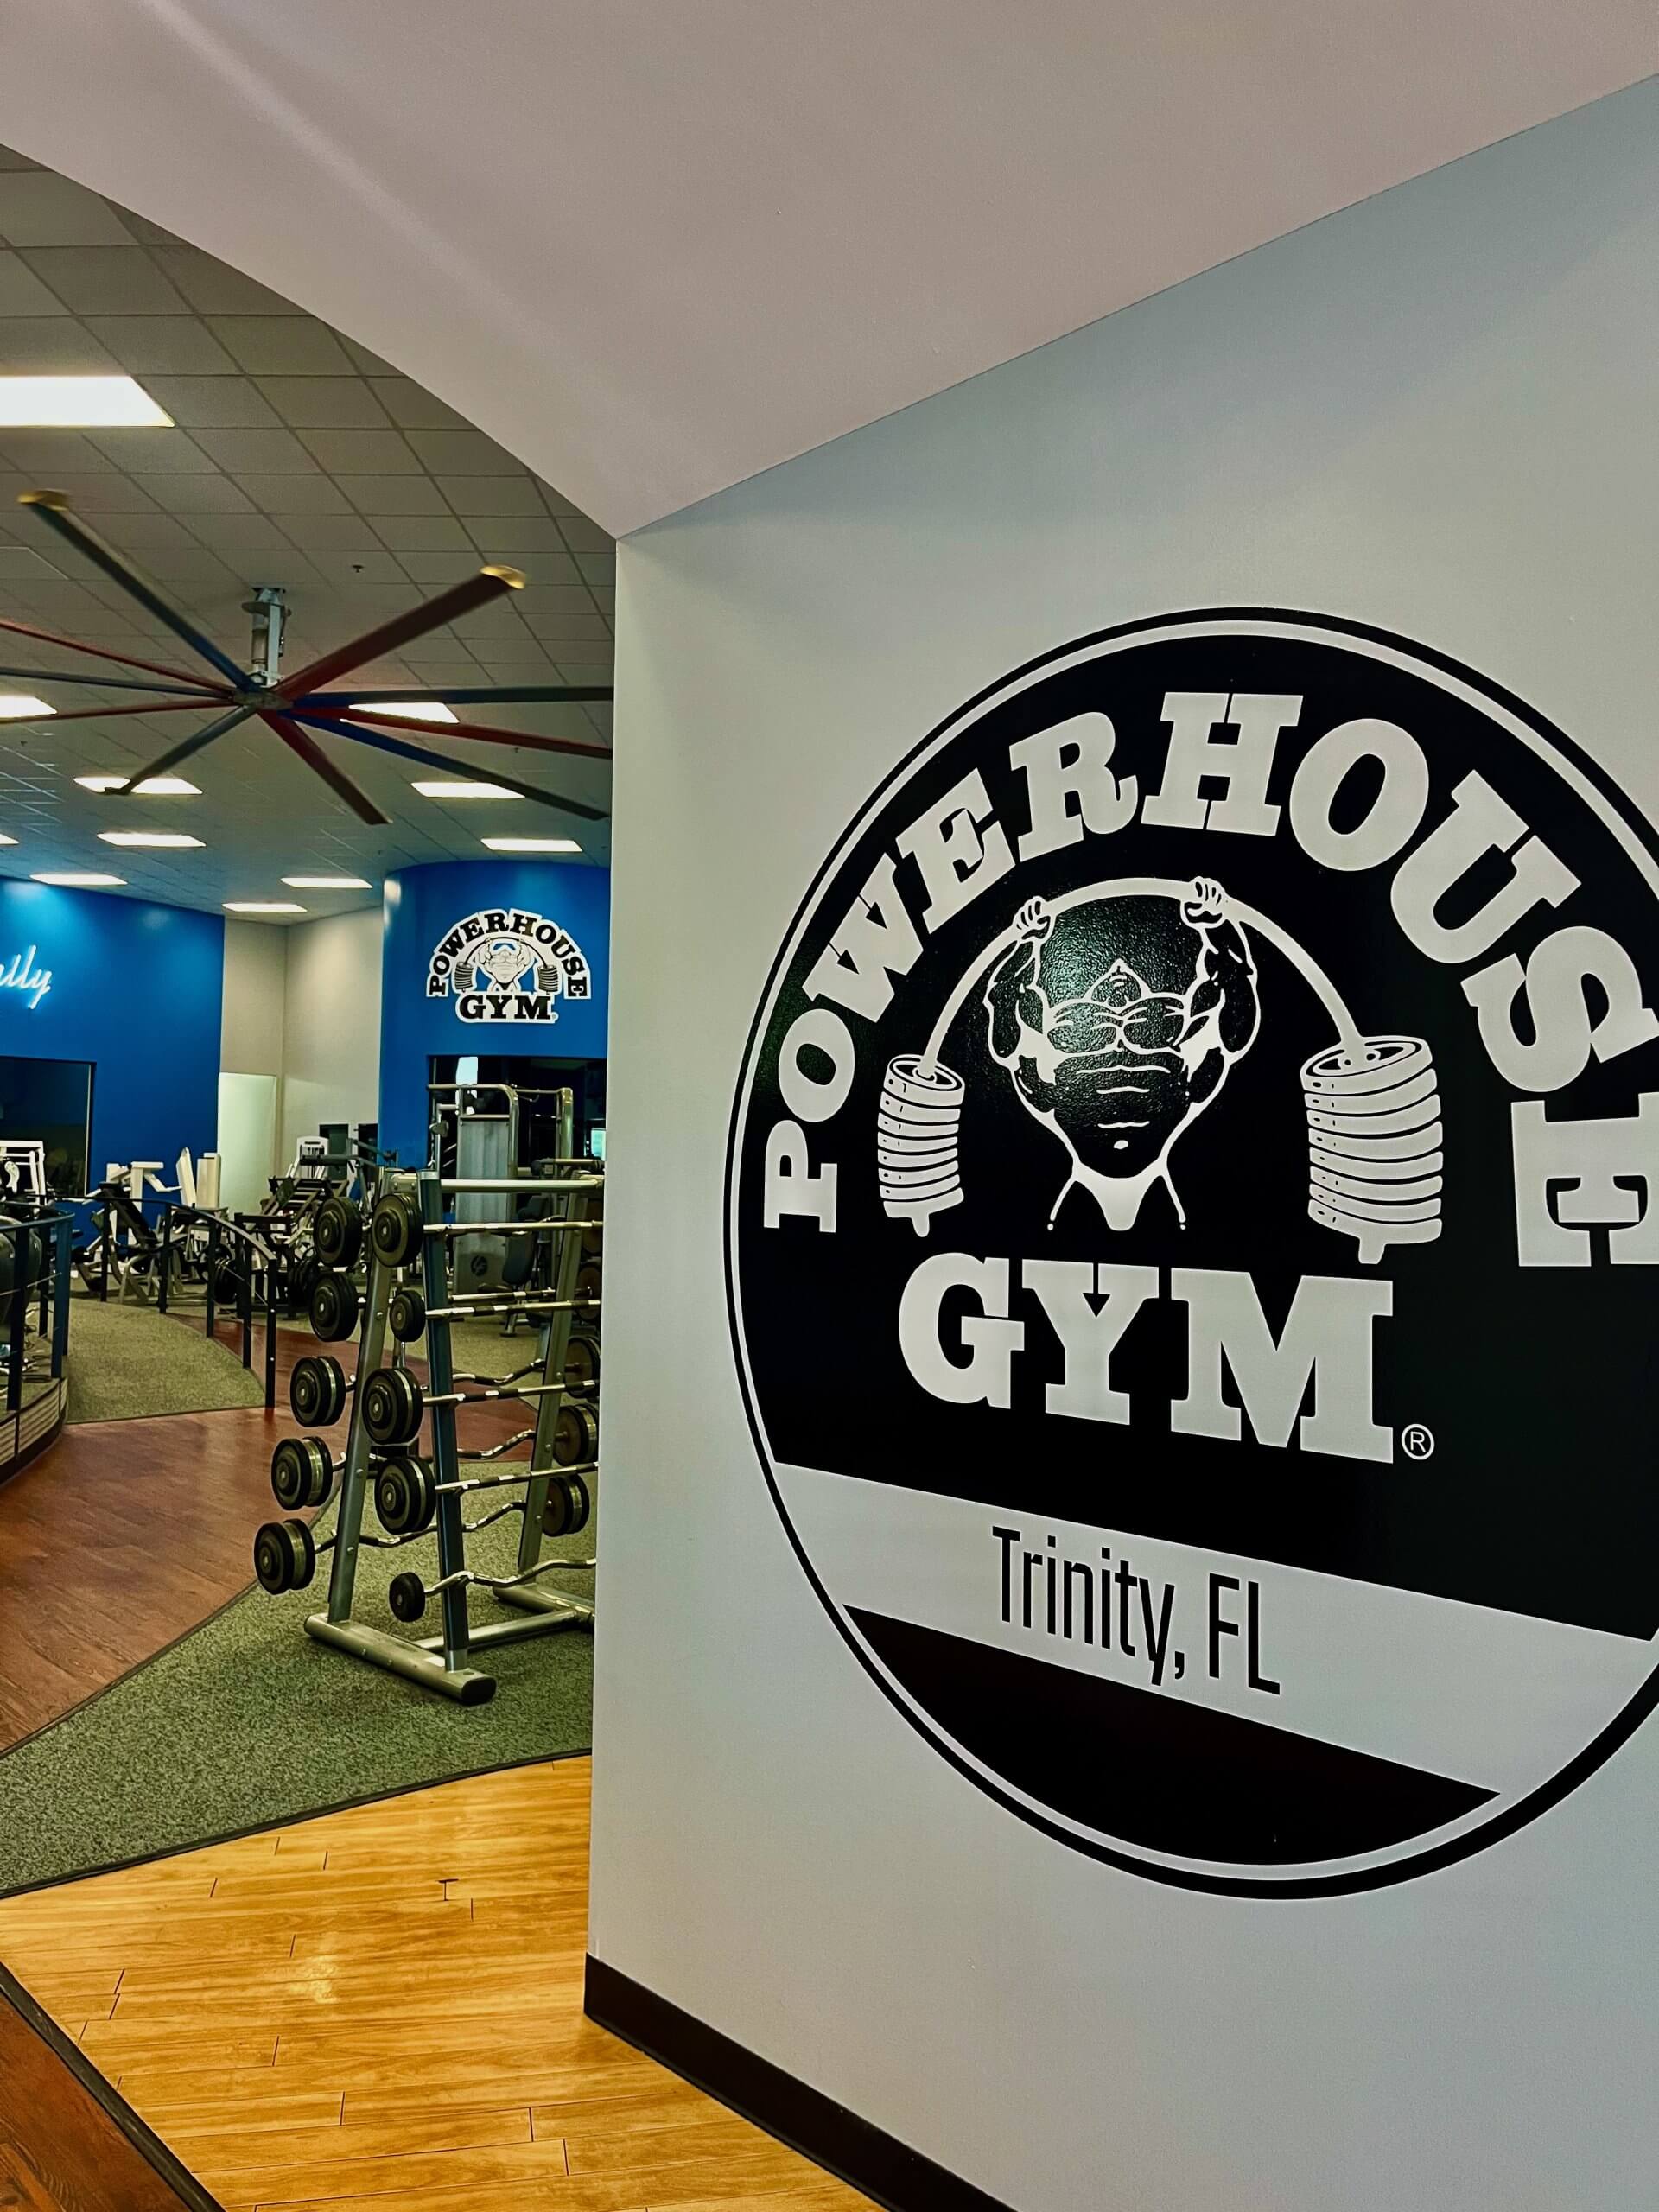 An Image of the Trinity, FL Powerhouse Gym Location